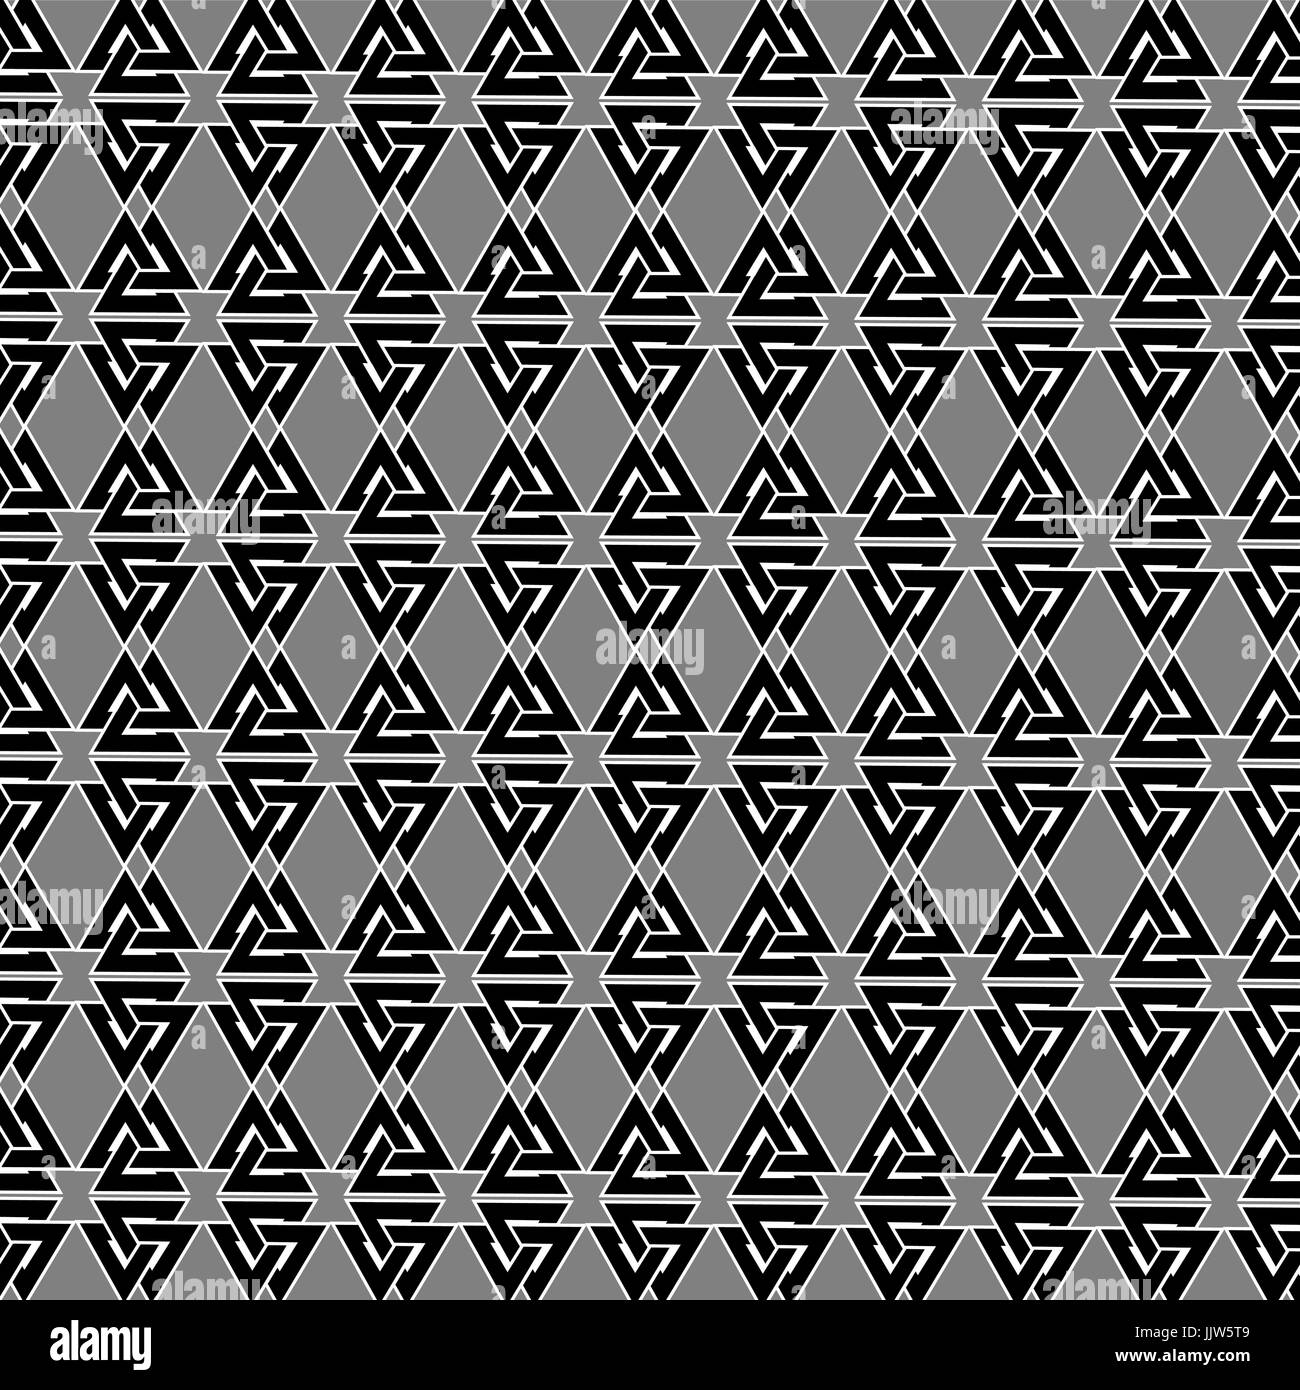 Valknut vector pattern, Valknut black and white background Stock Vector